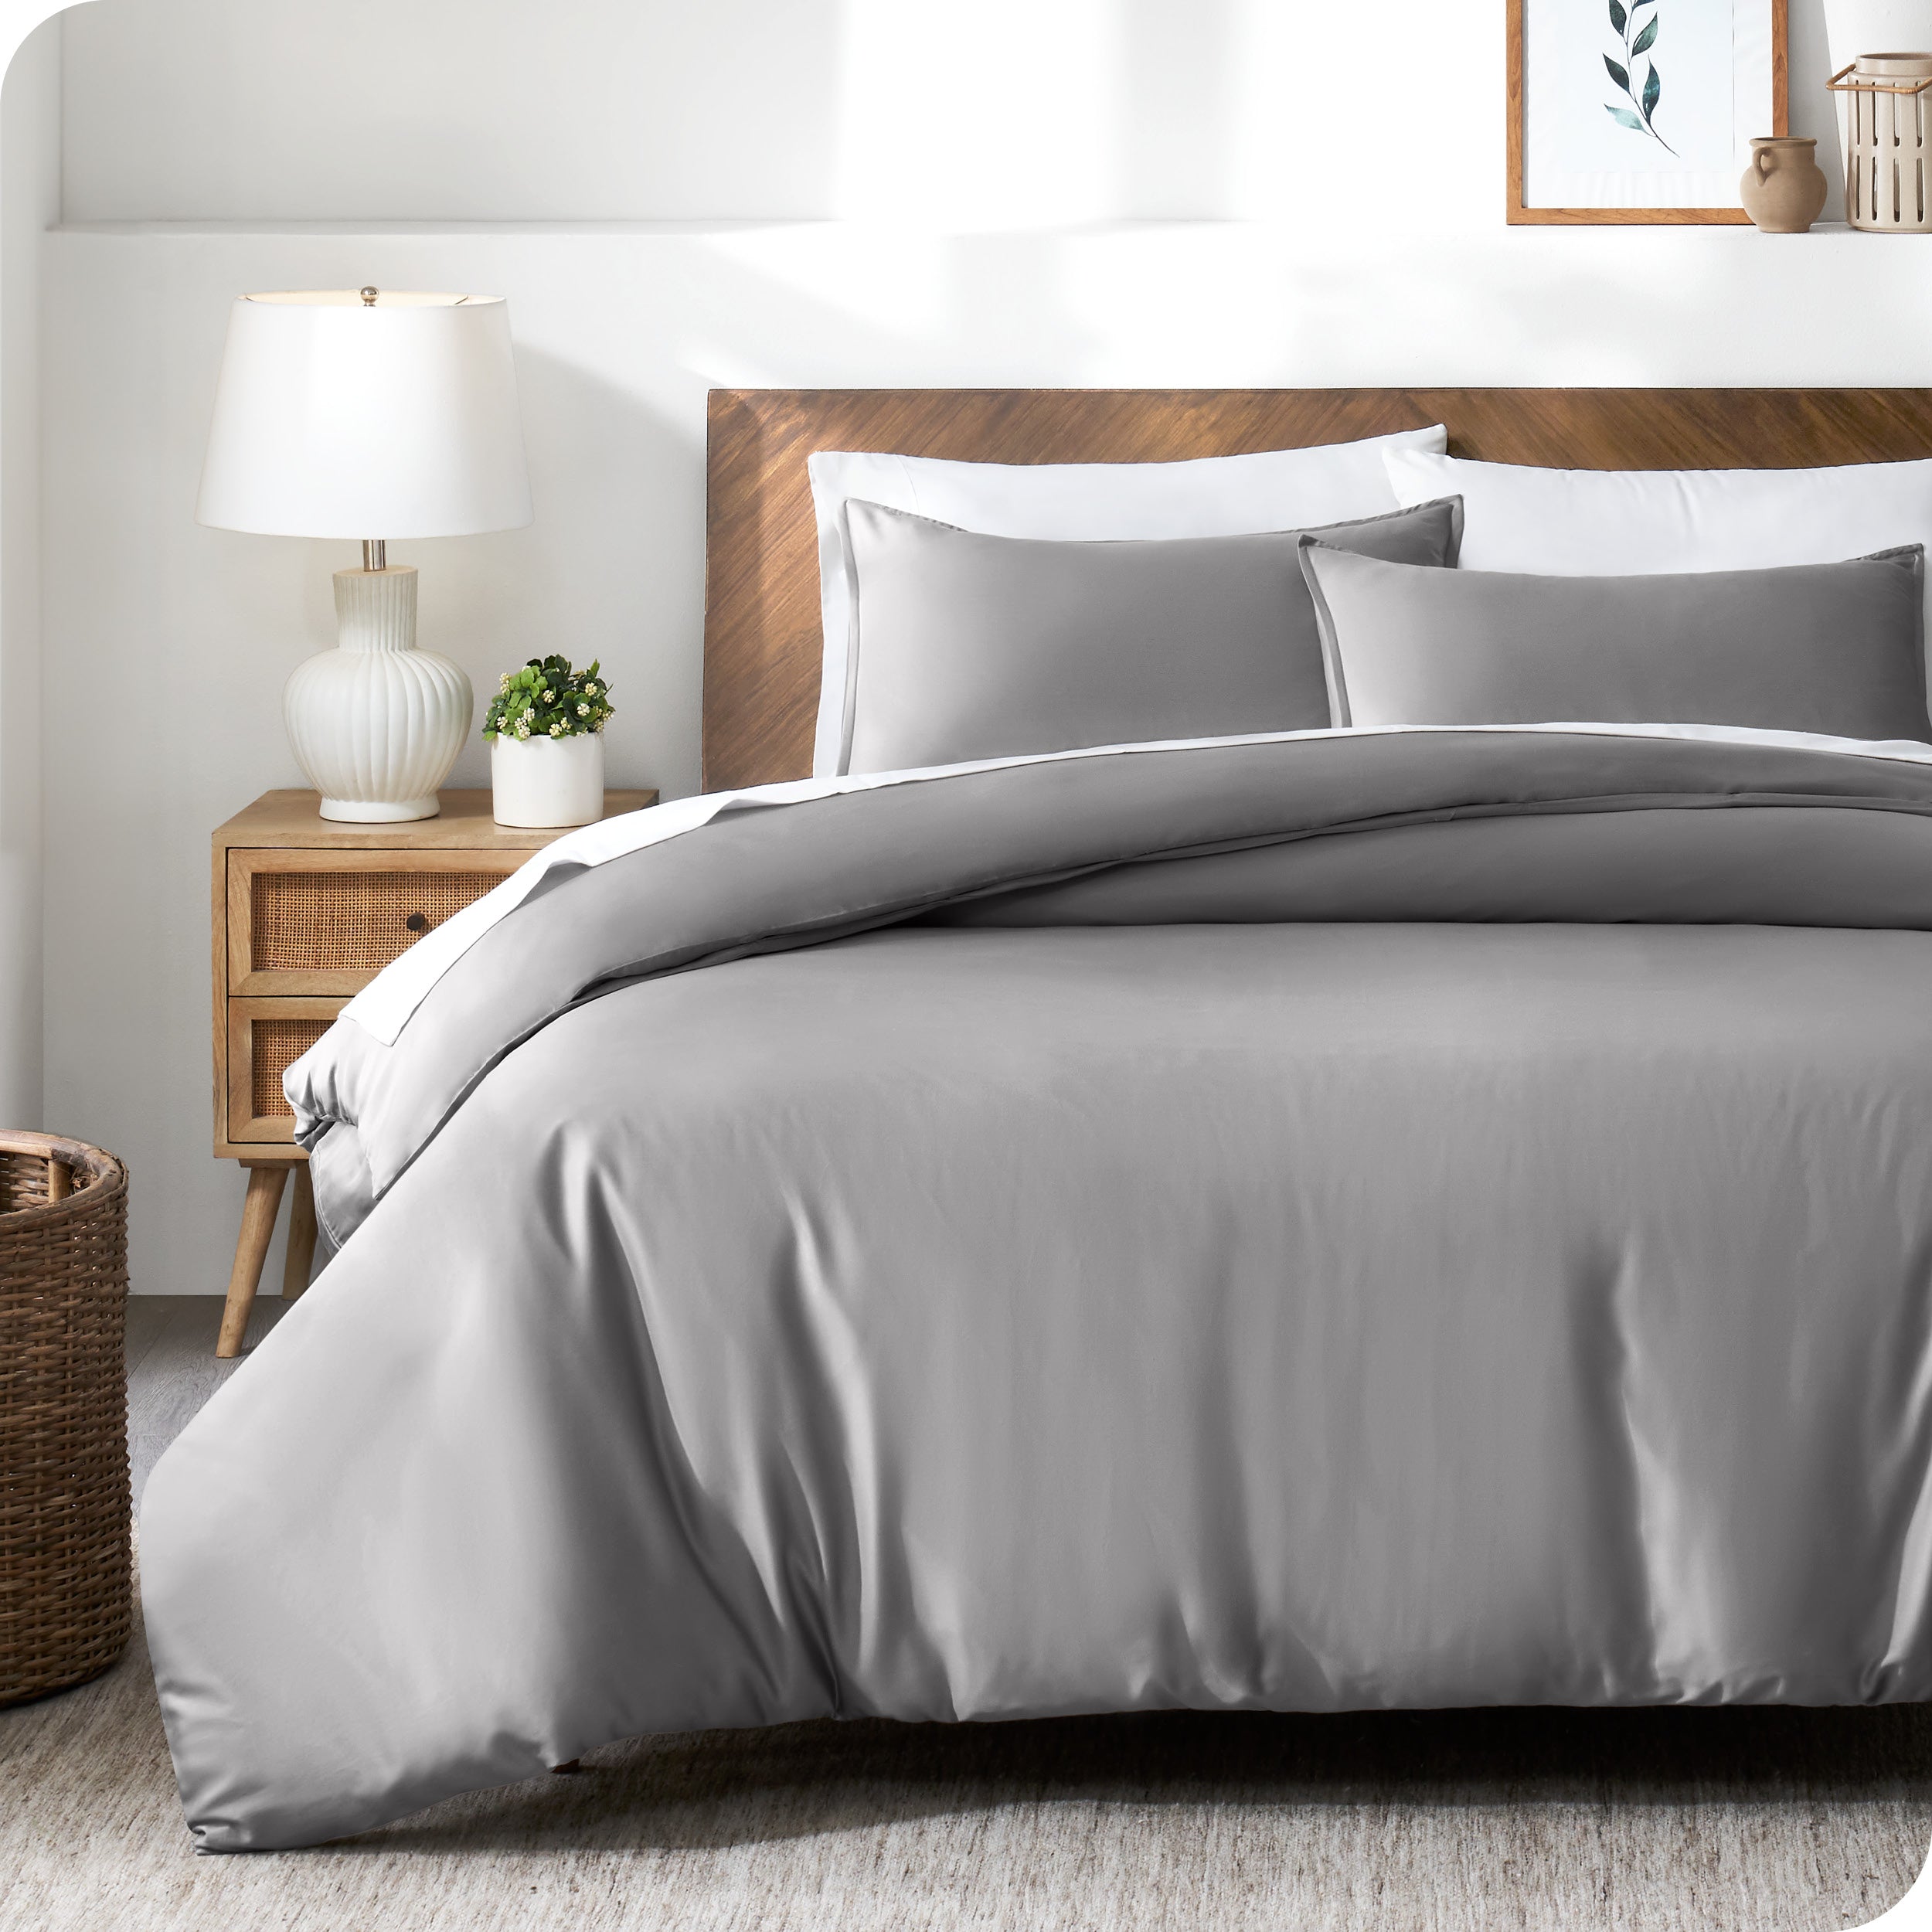 TENCEL™ duvet cover on a mattress in a modern bedroom